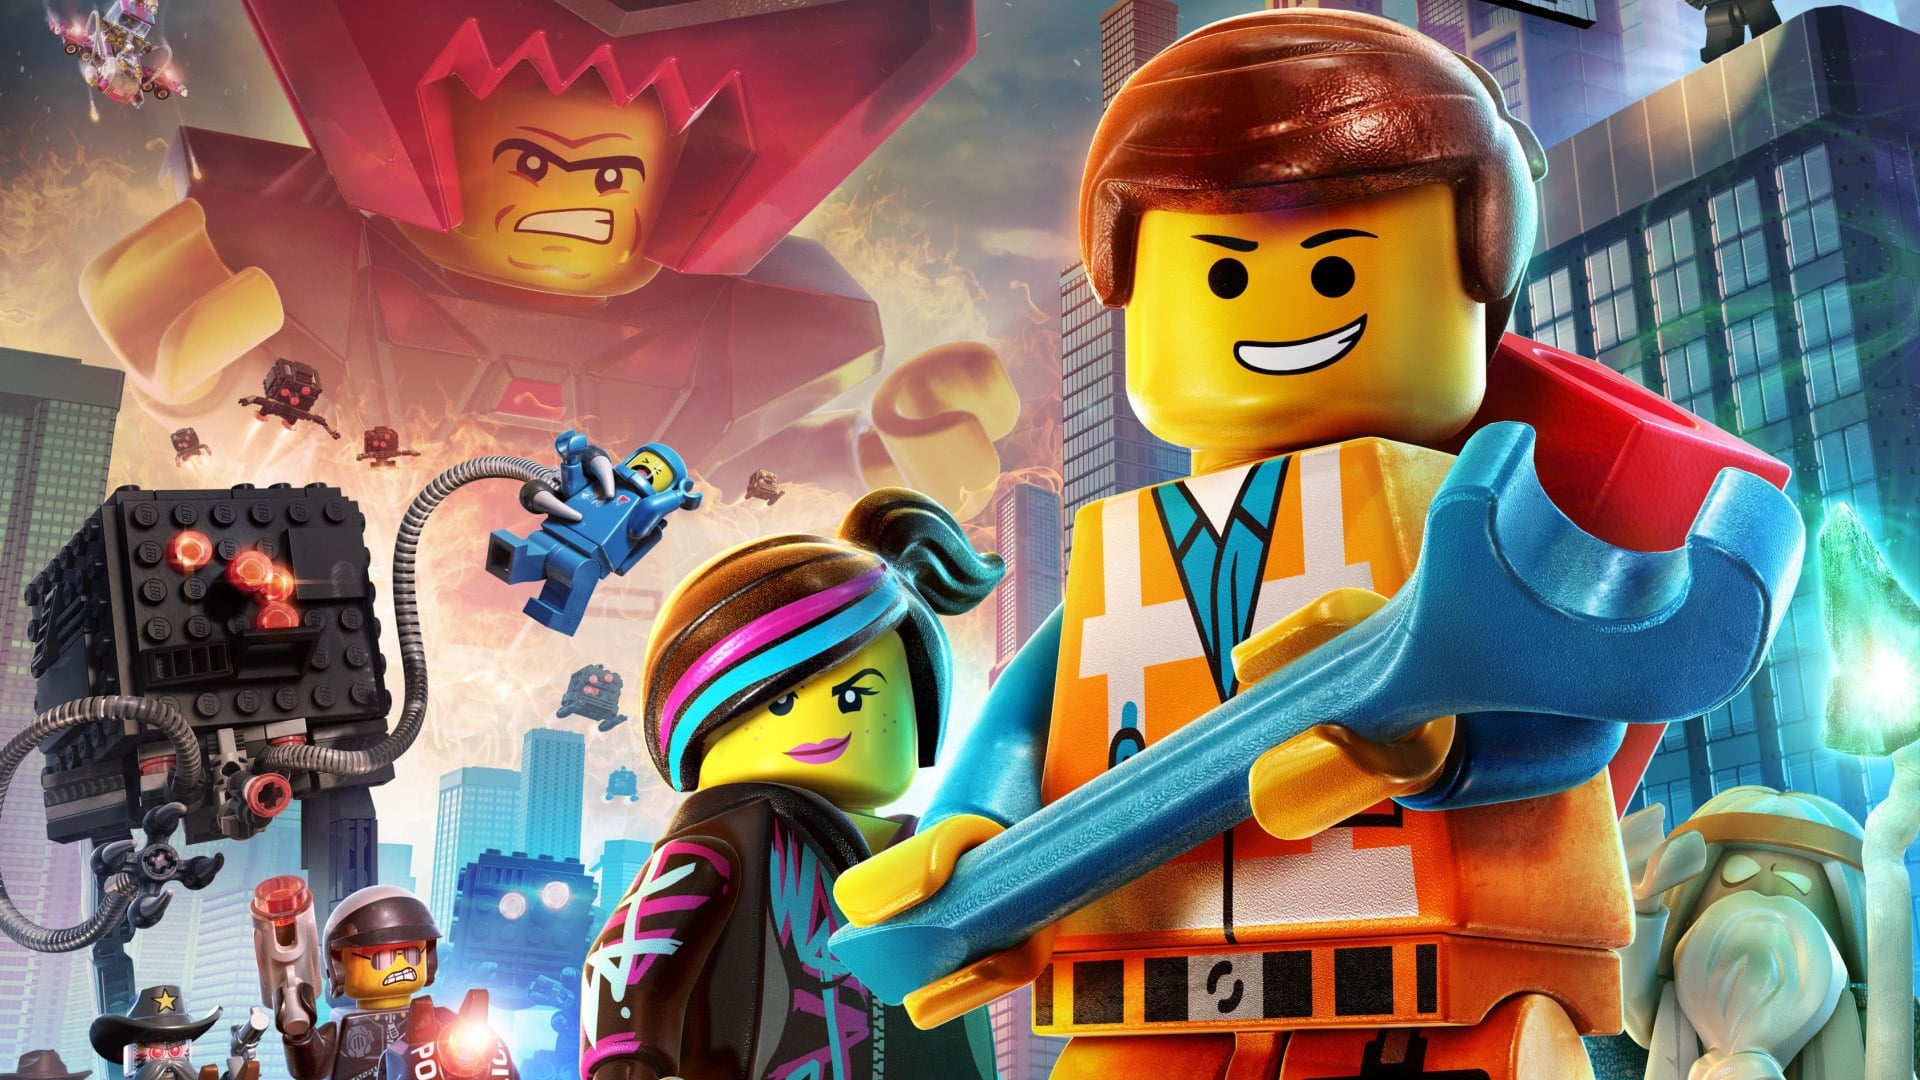 Banner Phim Câu Chuyện Lego (The Lego Movie)